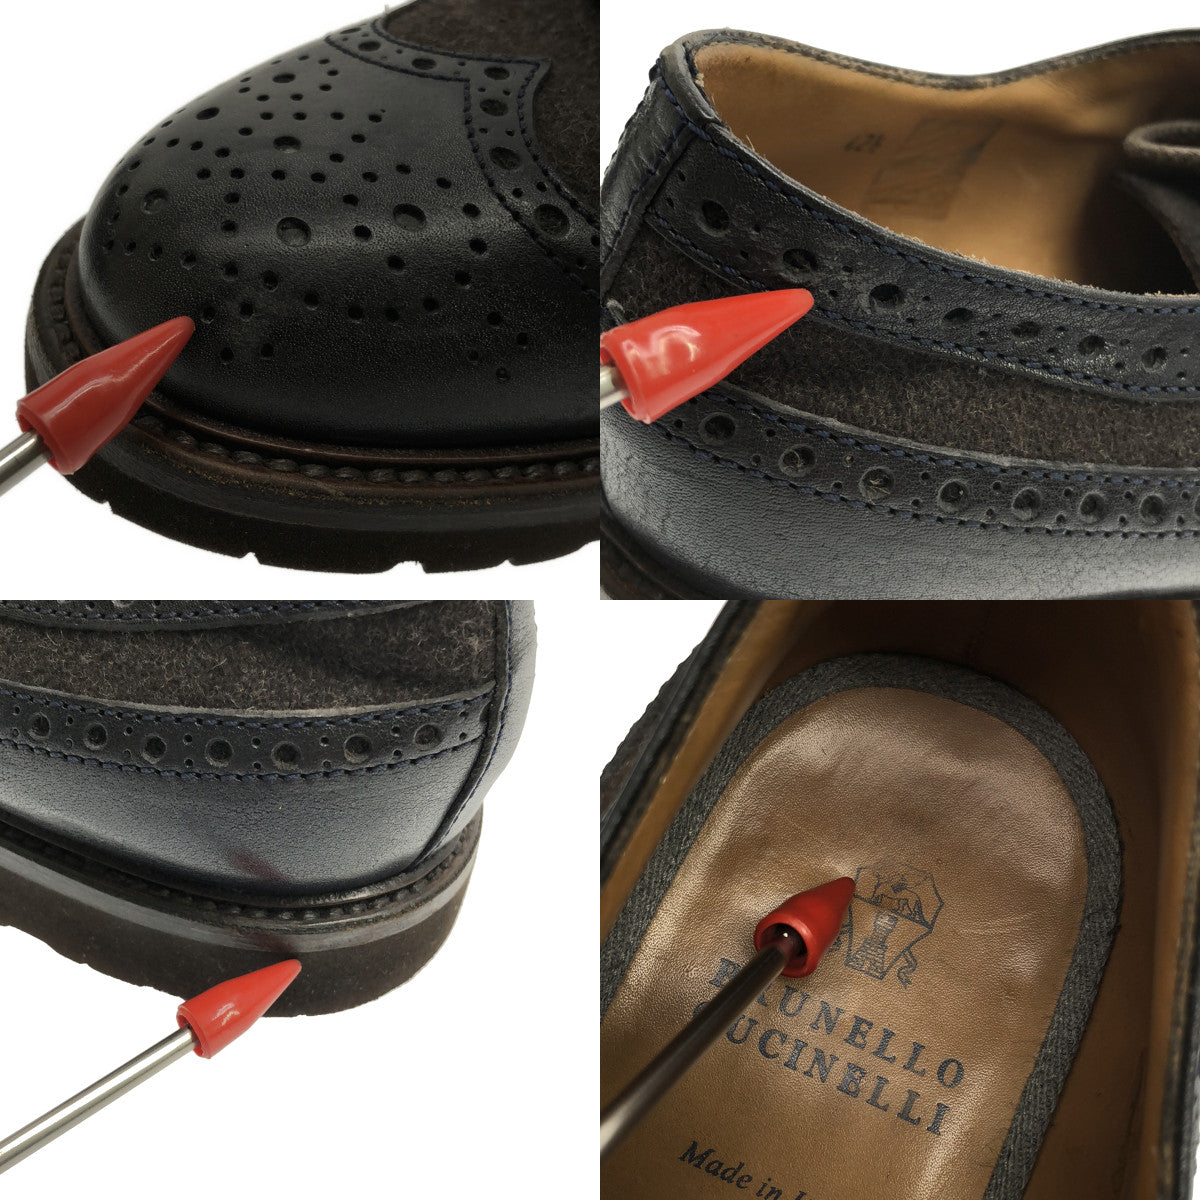 BRUNELLO CUCINELLI / ブルネロクチネリ | 異素材 ウール切替 メダリオン レザーシューズ / 革靴 | 42 1/2 | メンズ